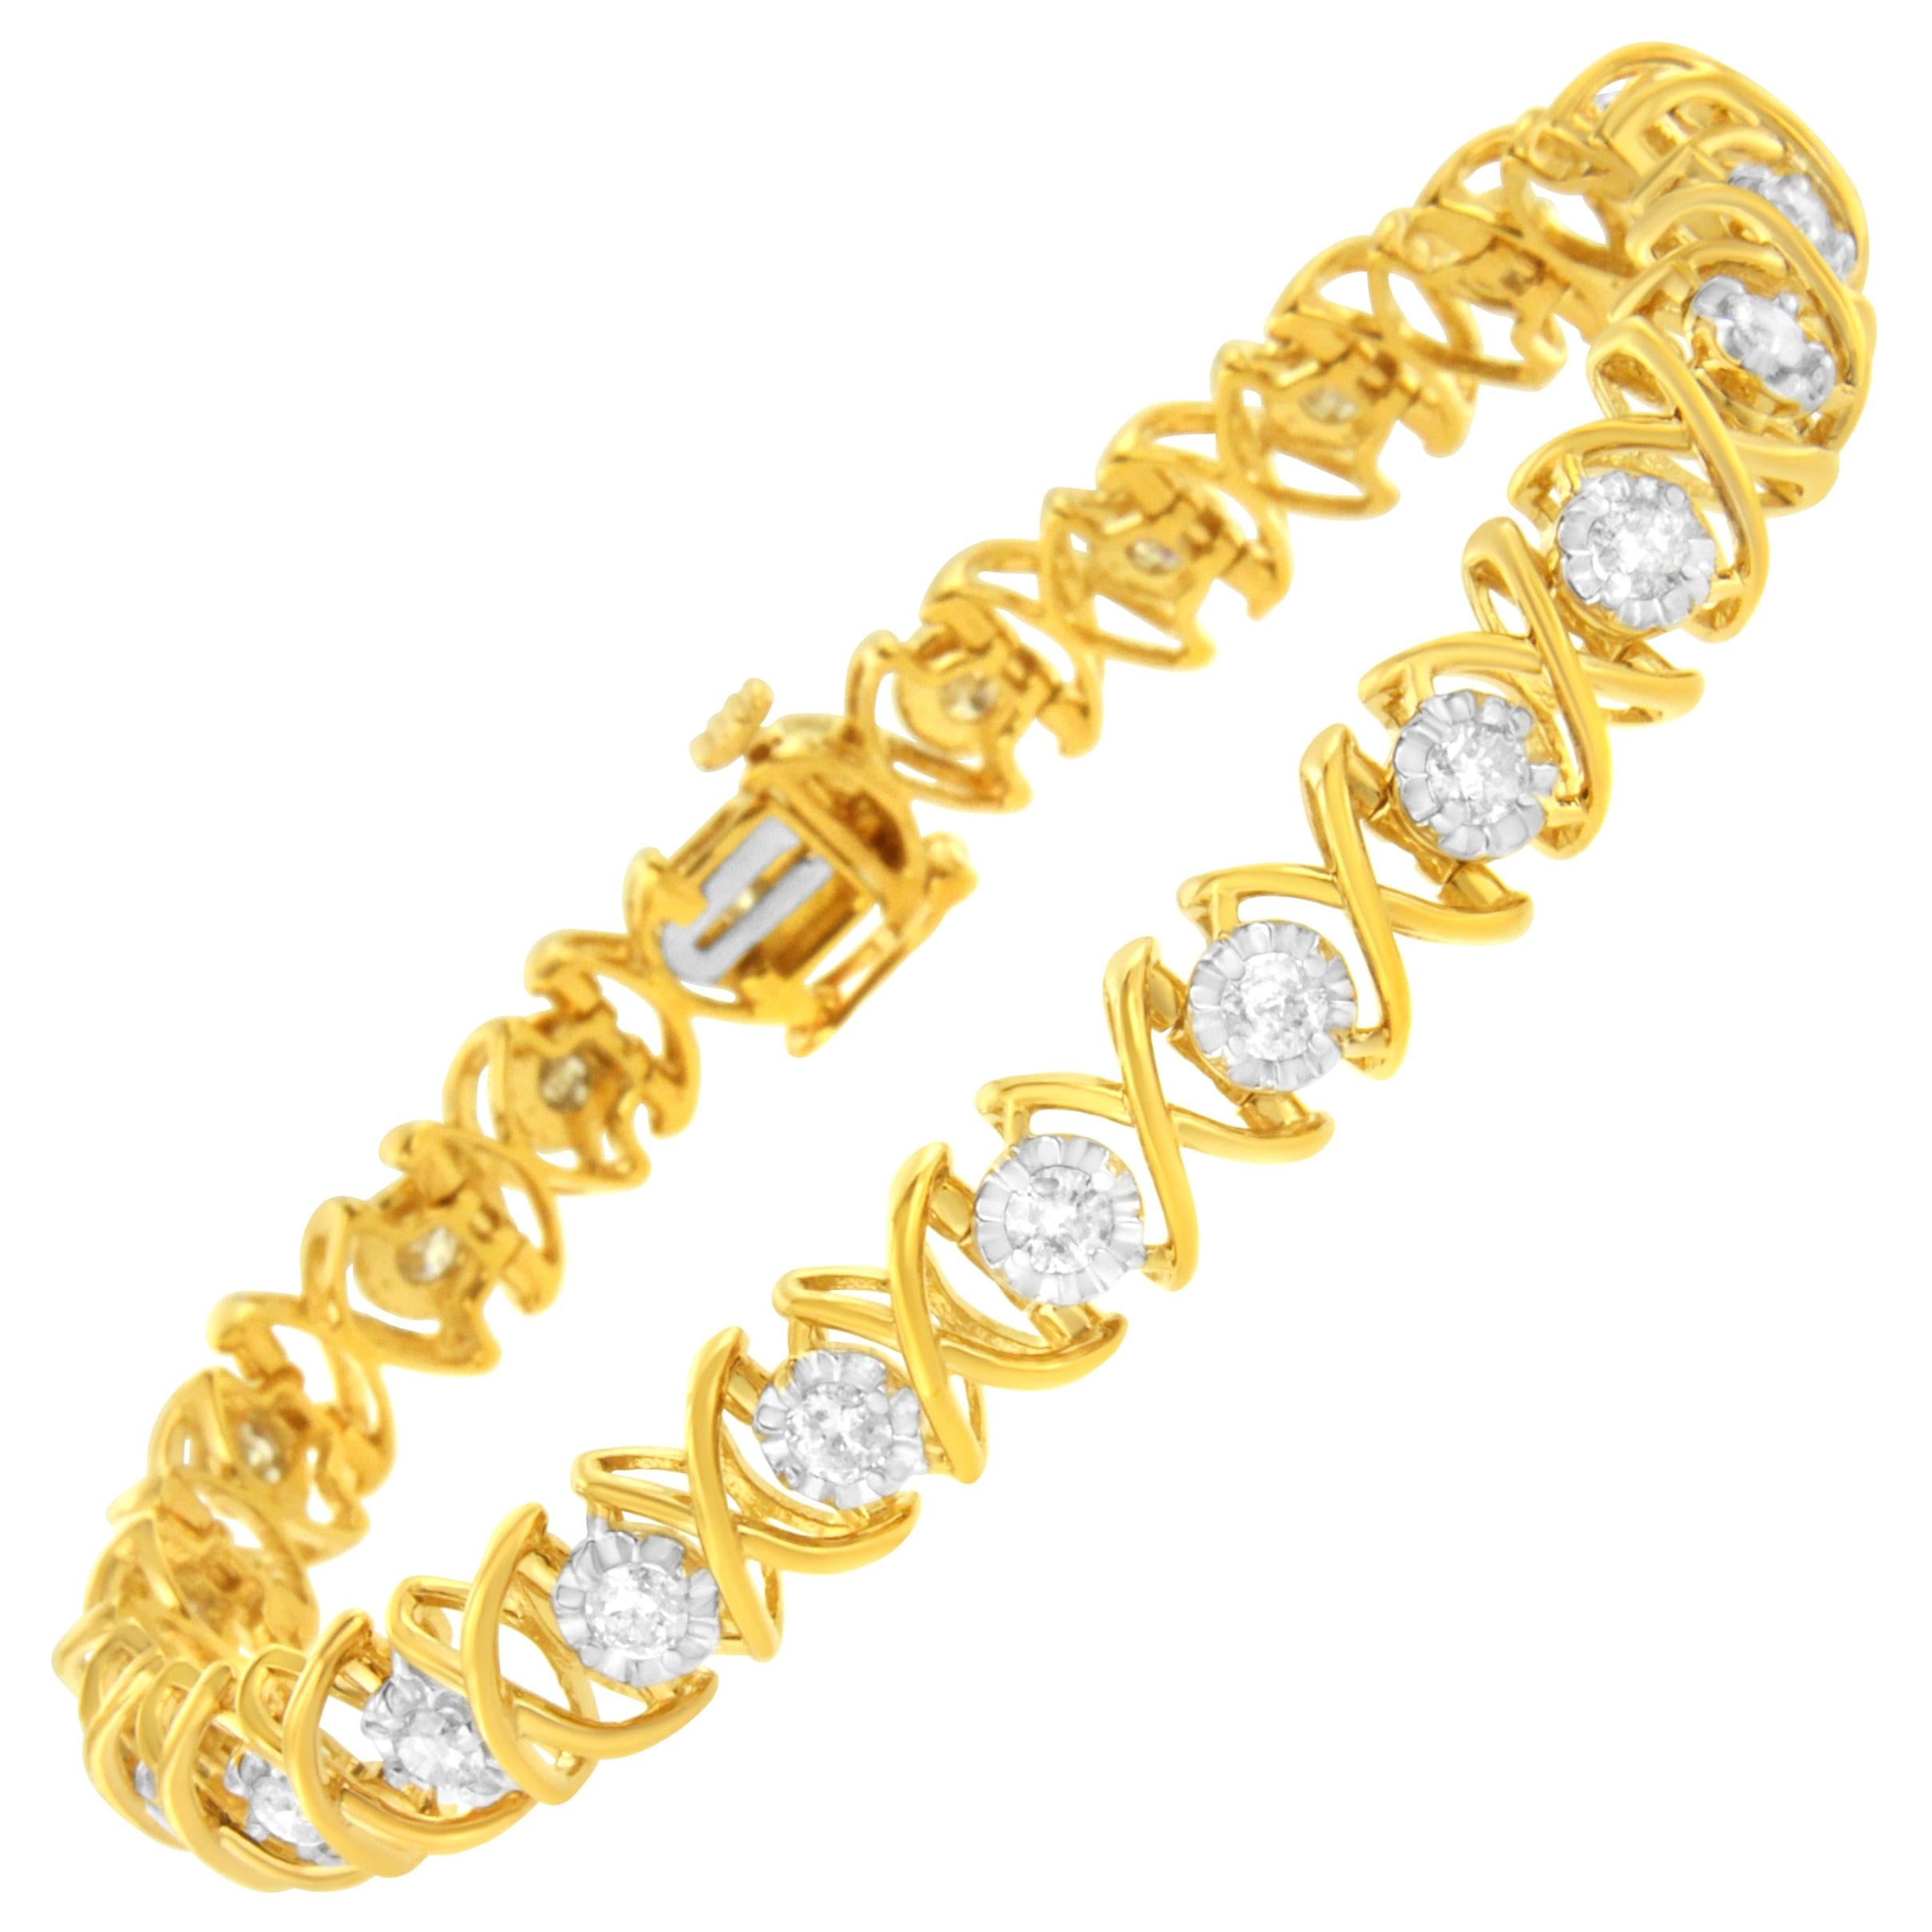 10K Yellow Gold Plated Sterling Silver 2.00 Carat Diamond "XOXO" Link Bracelet